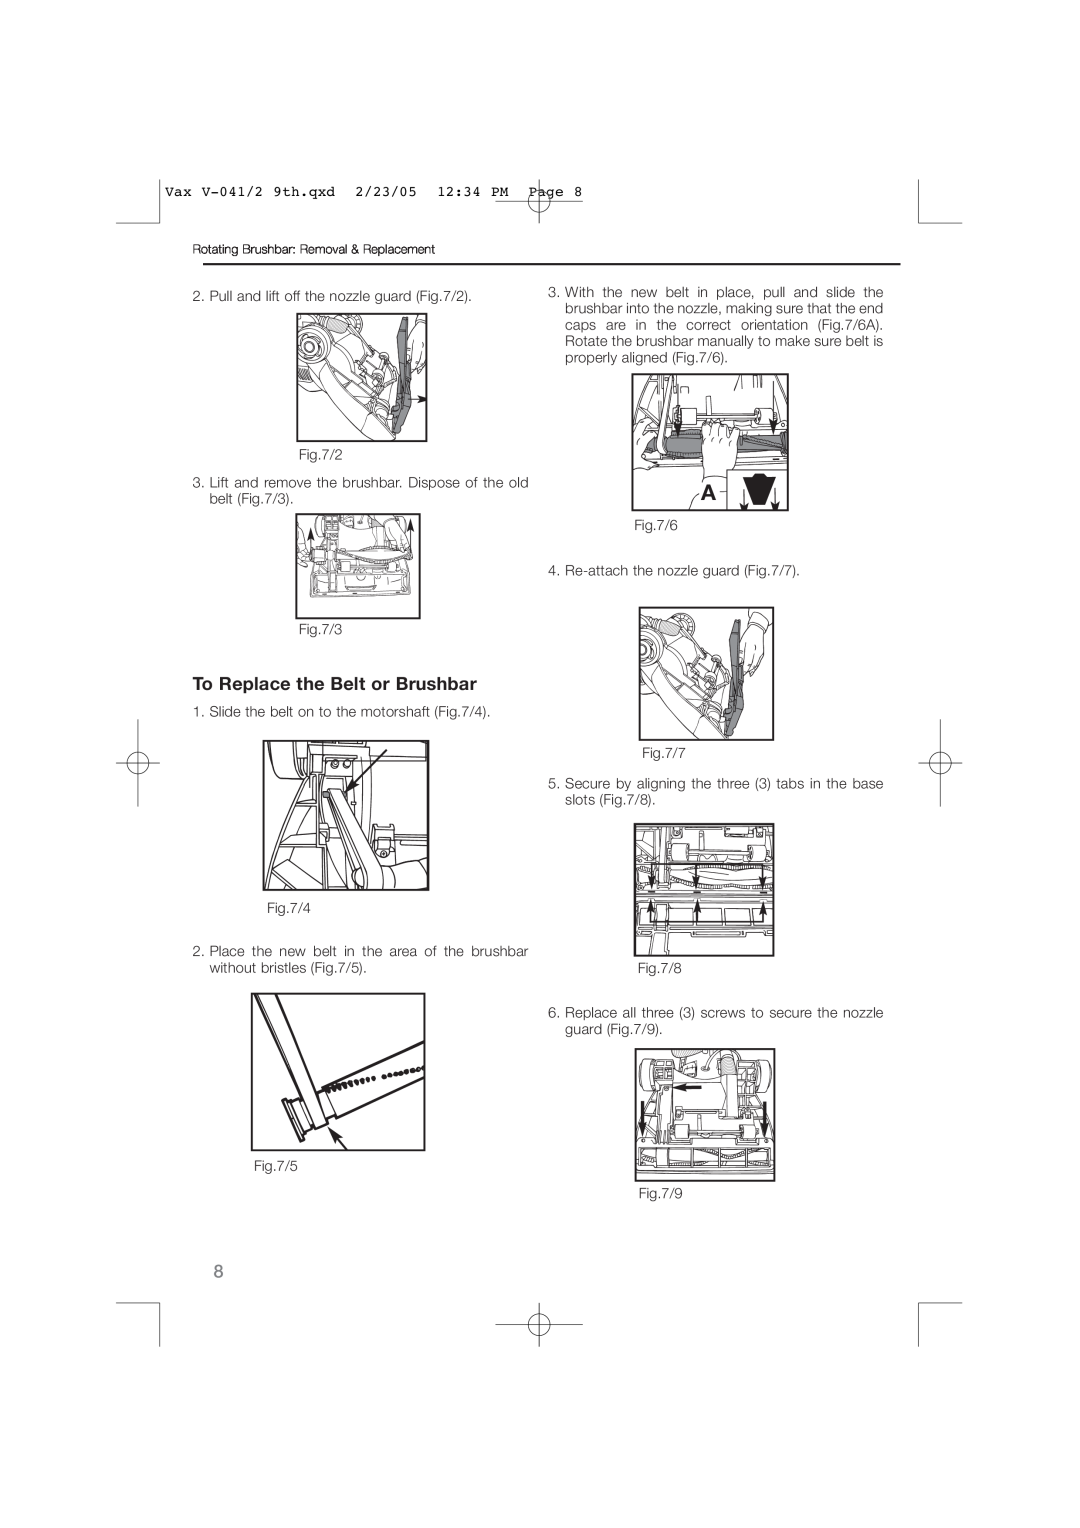 Vax V-042, V-041 instruction manual To Replace the Belt or Brushbar 